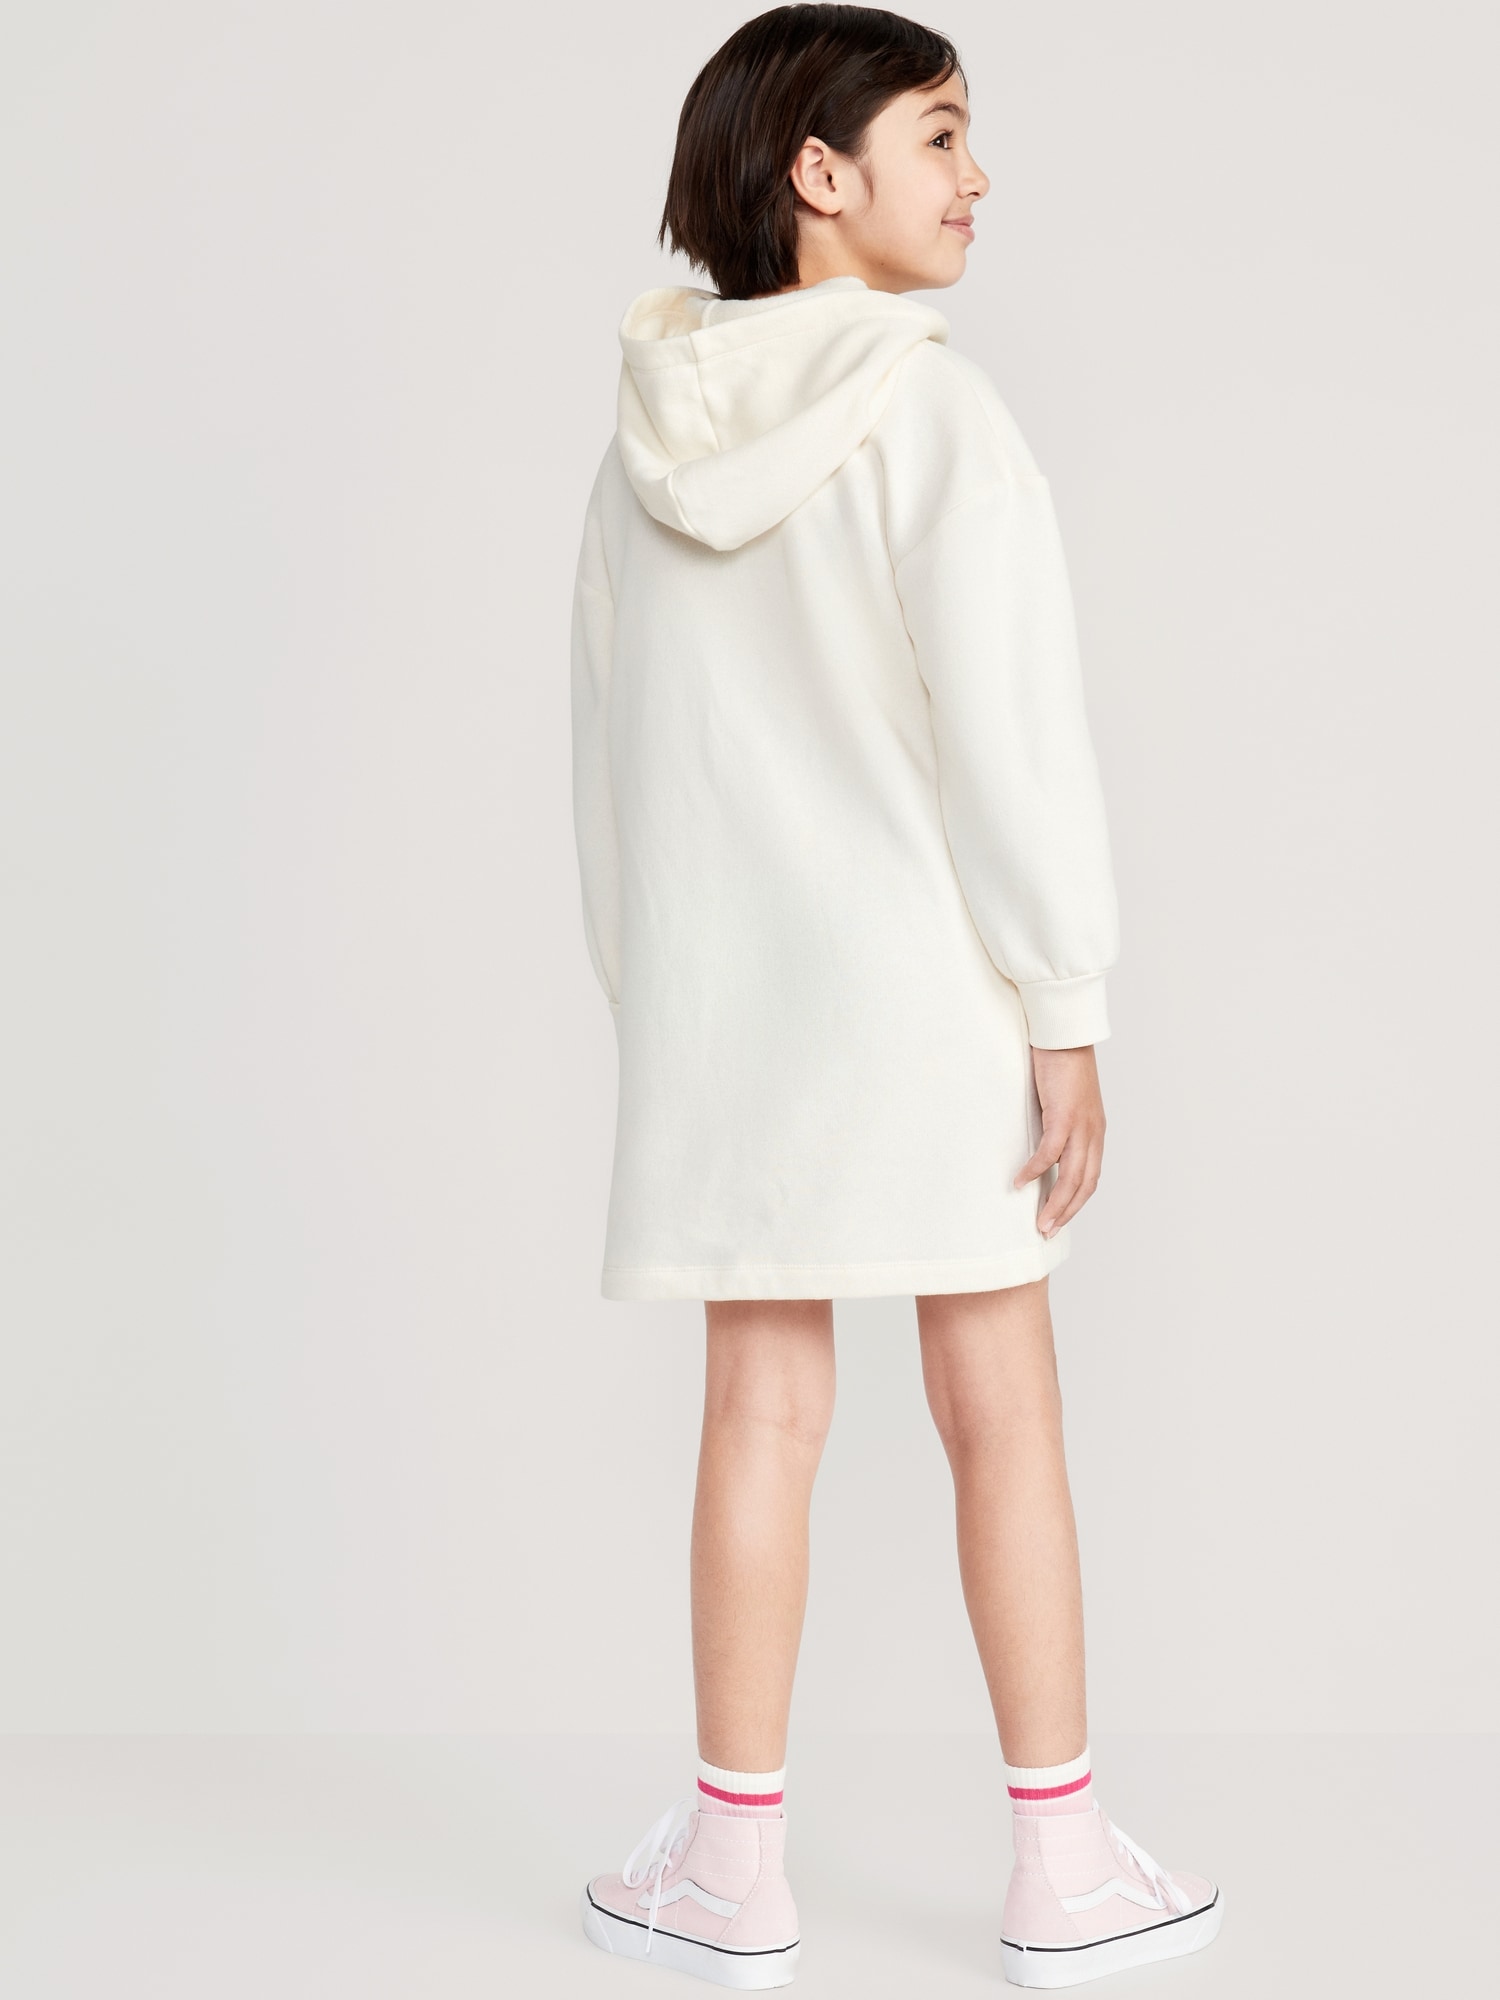 Long-Sleeve Fleece Hoodie Dress for Girls